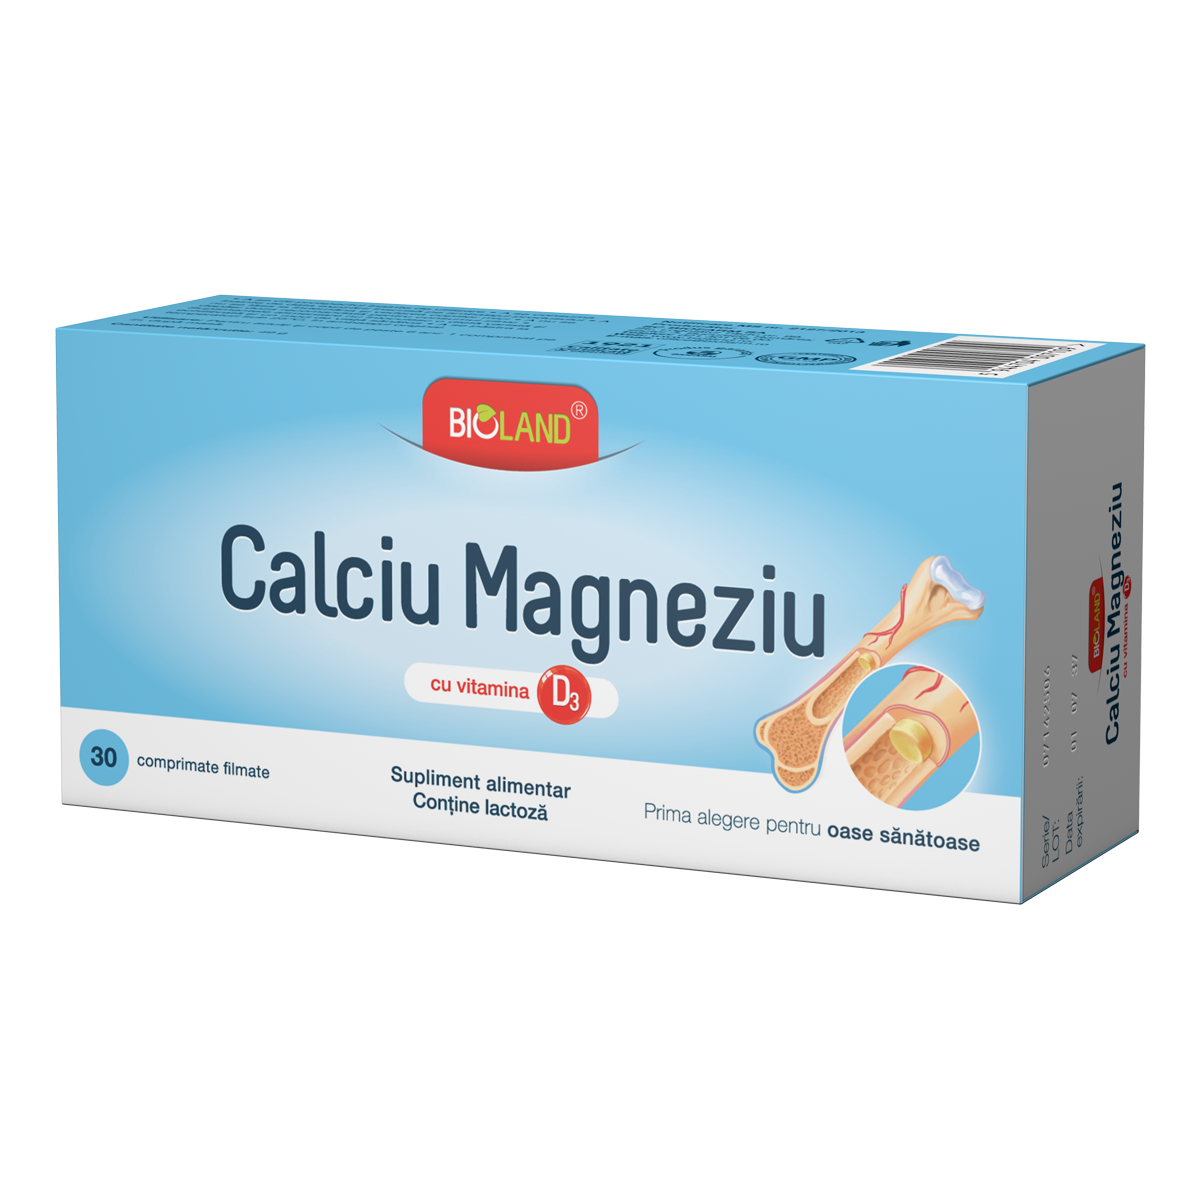 Uz general - Calciu Magneziu cu Vitamina D3 Bioland, 30 comprimate, Biofarm, sinapis.ro